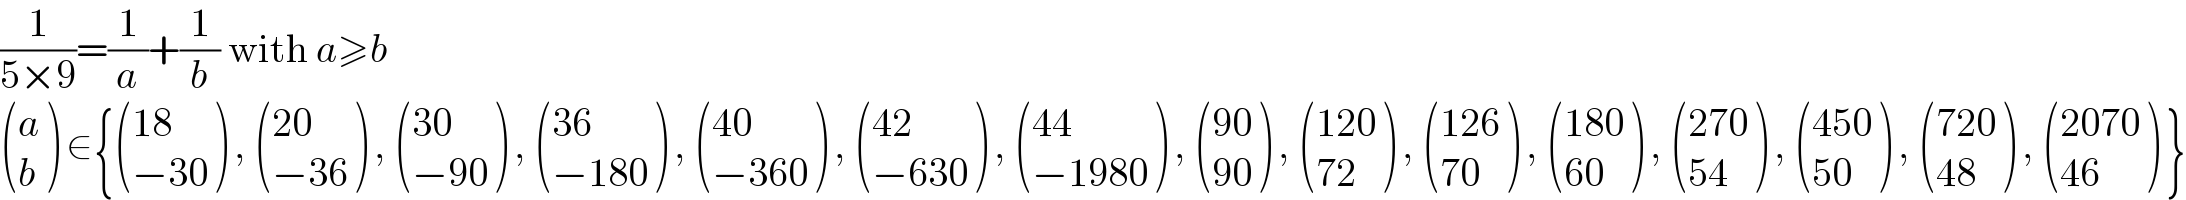 (1/(5×9))=(1/a)+(1/b) with a≥b   ((a),(b) ) ∈{ (((18)),((−30)) ) ,  (((20)),((−36)) ) ,  (((30)),((−90)) ) ,  (((36)),((−180)) ) ,  (((40)),((−360)) ) ,  (((42)),((−630)) ) ,  (((44)),((−1980)) ) ,  (((90)),((90)) ) ,  (((120)),((72)) ) ,  (((126)),((70)) ) ,  (((180)),((60)) ) ,  (((270)),((54)) ) ,  (((450)),((50)) ) ,  (((720)),((48)) ) ,  (((2070)),((46)) ) }  